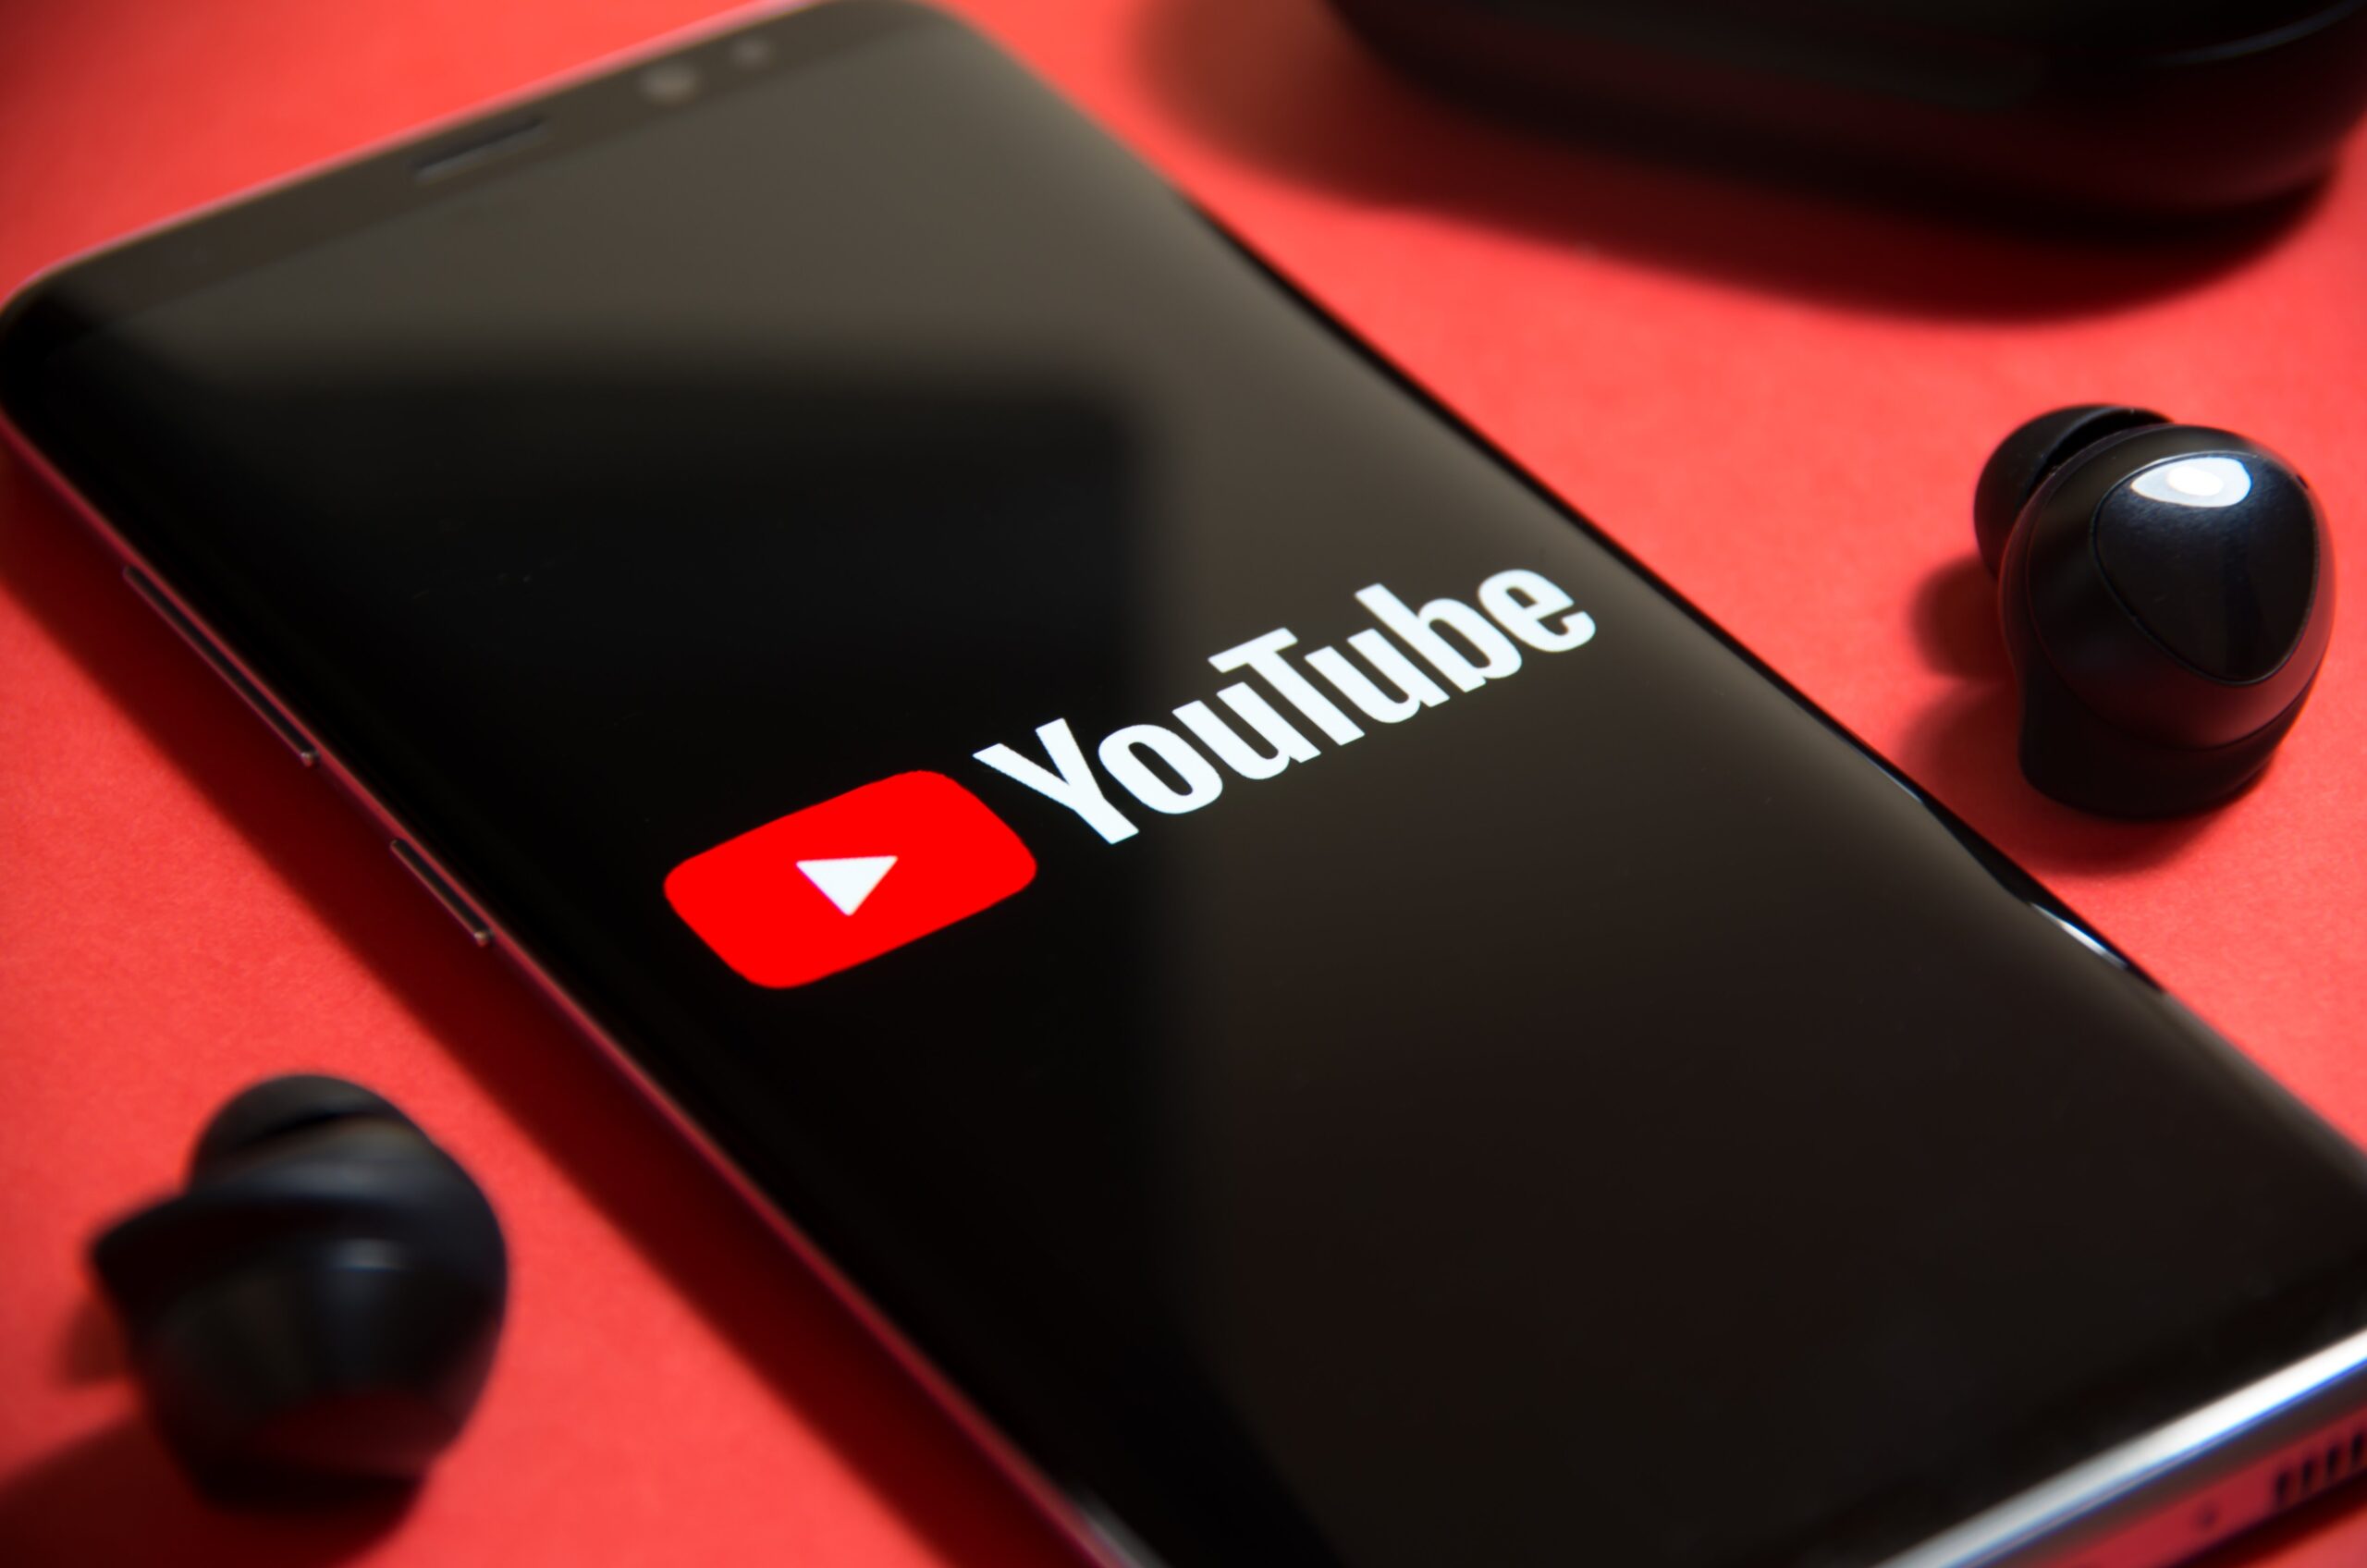 YouTube logo on a smartphone